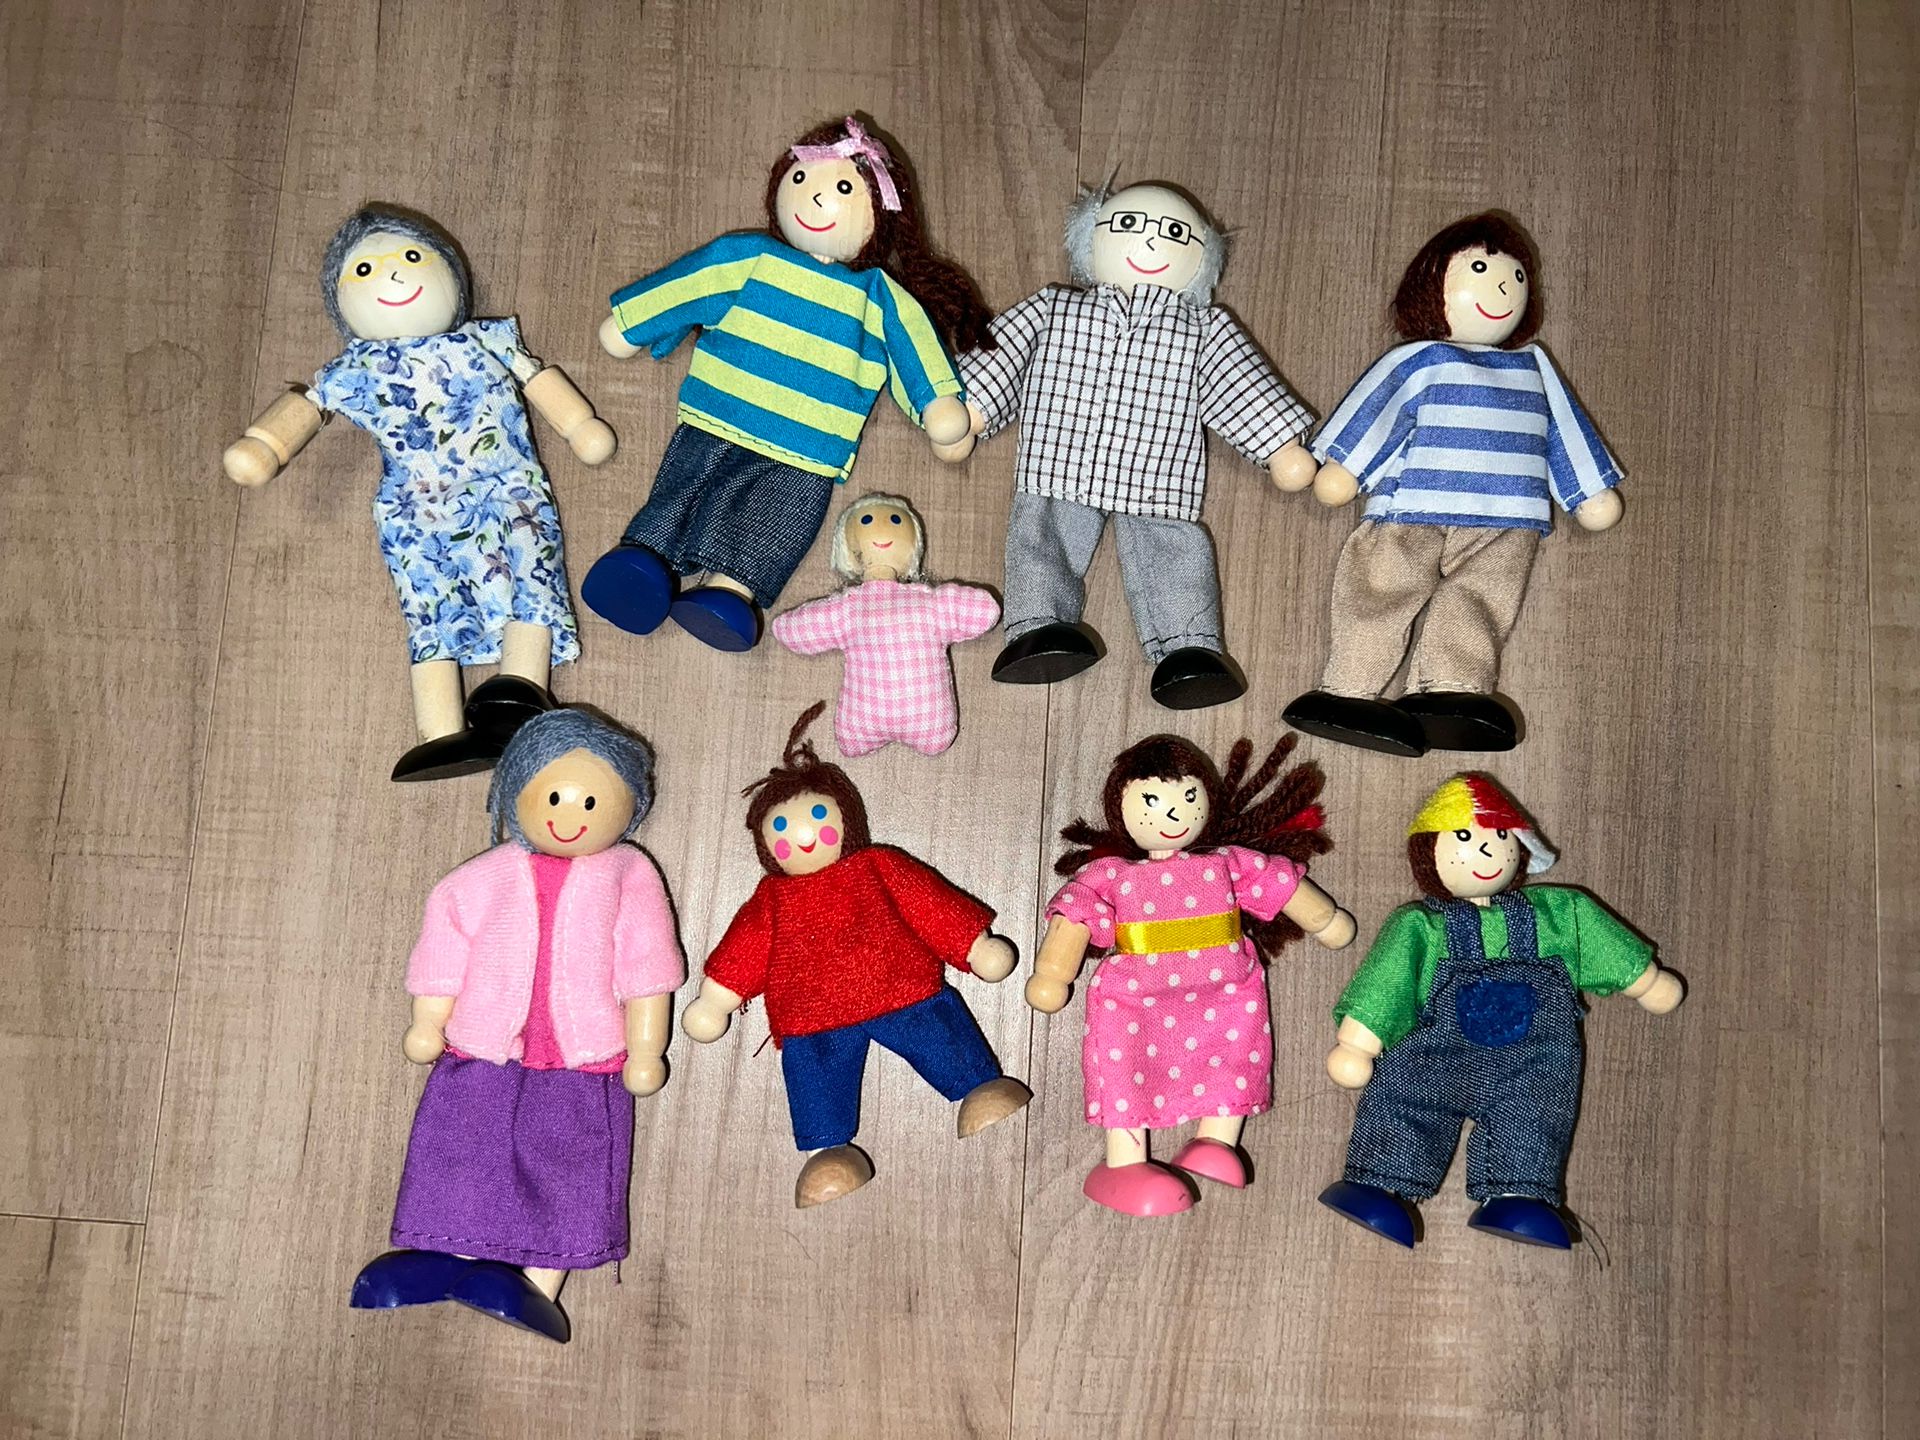 Melissa & Doug Wooden Doll House Doll Family - Poseable Wood Dolls - Set of 9